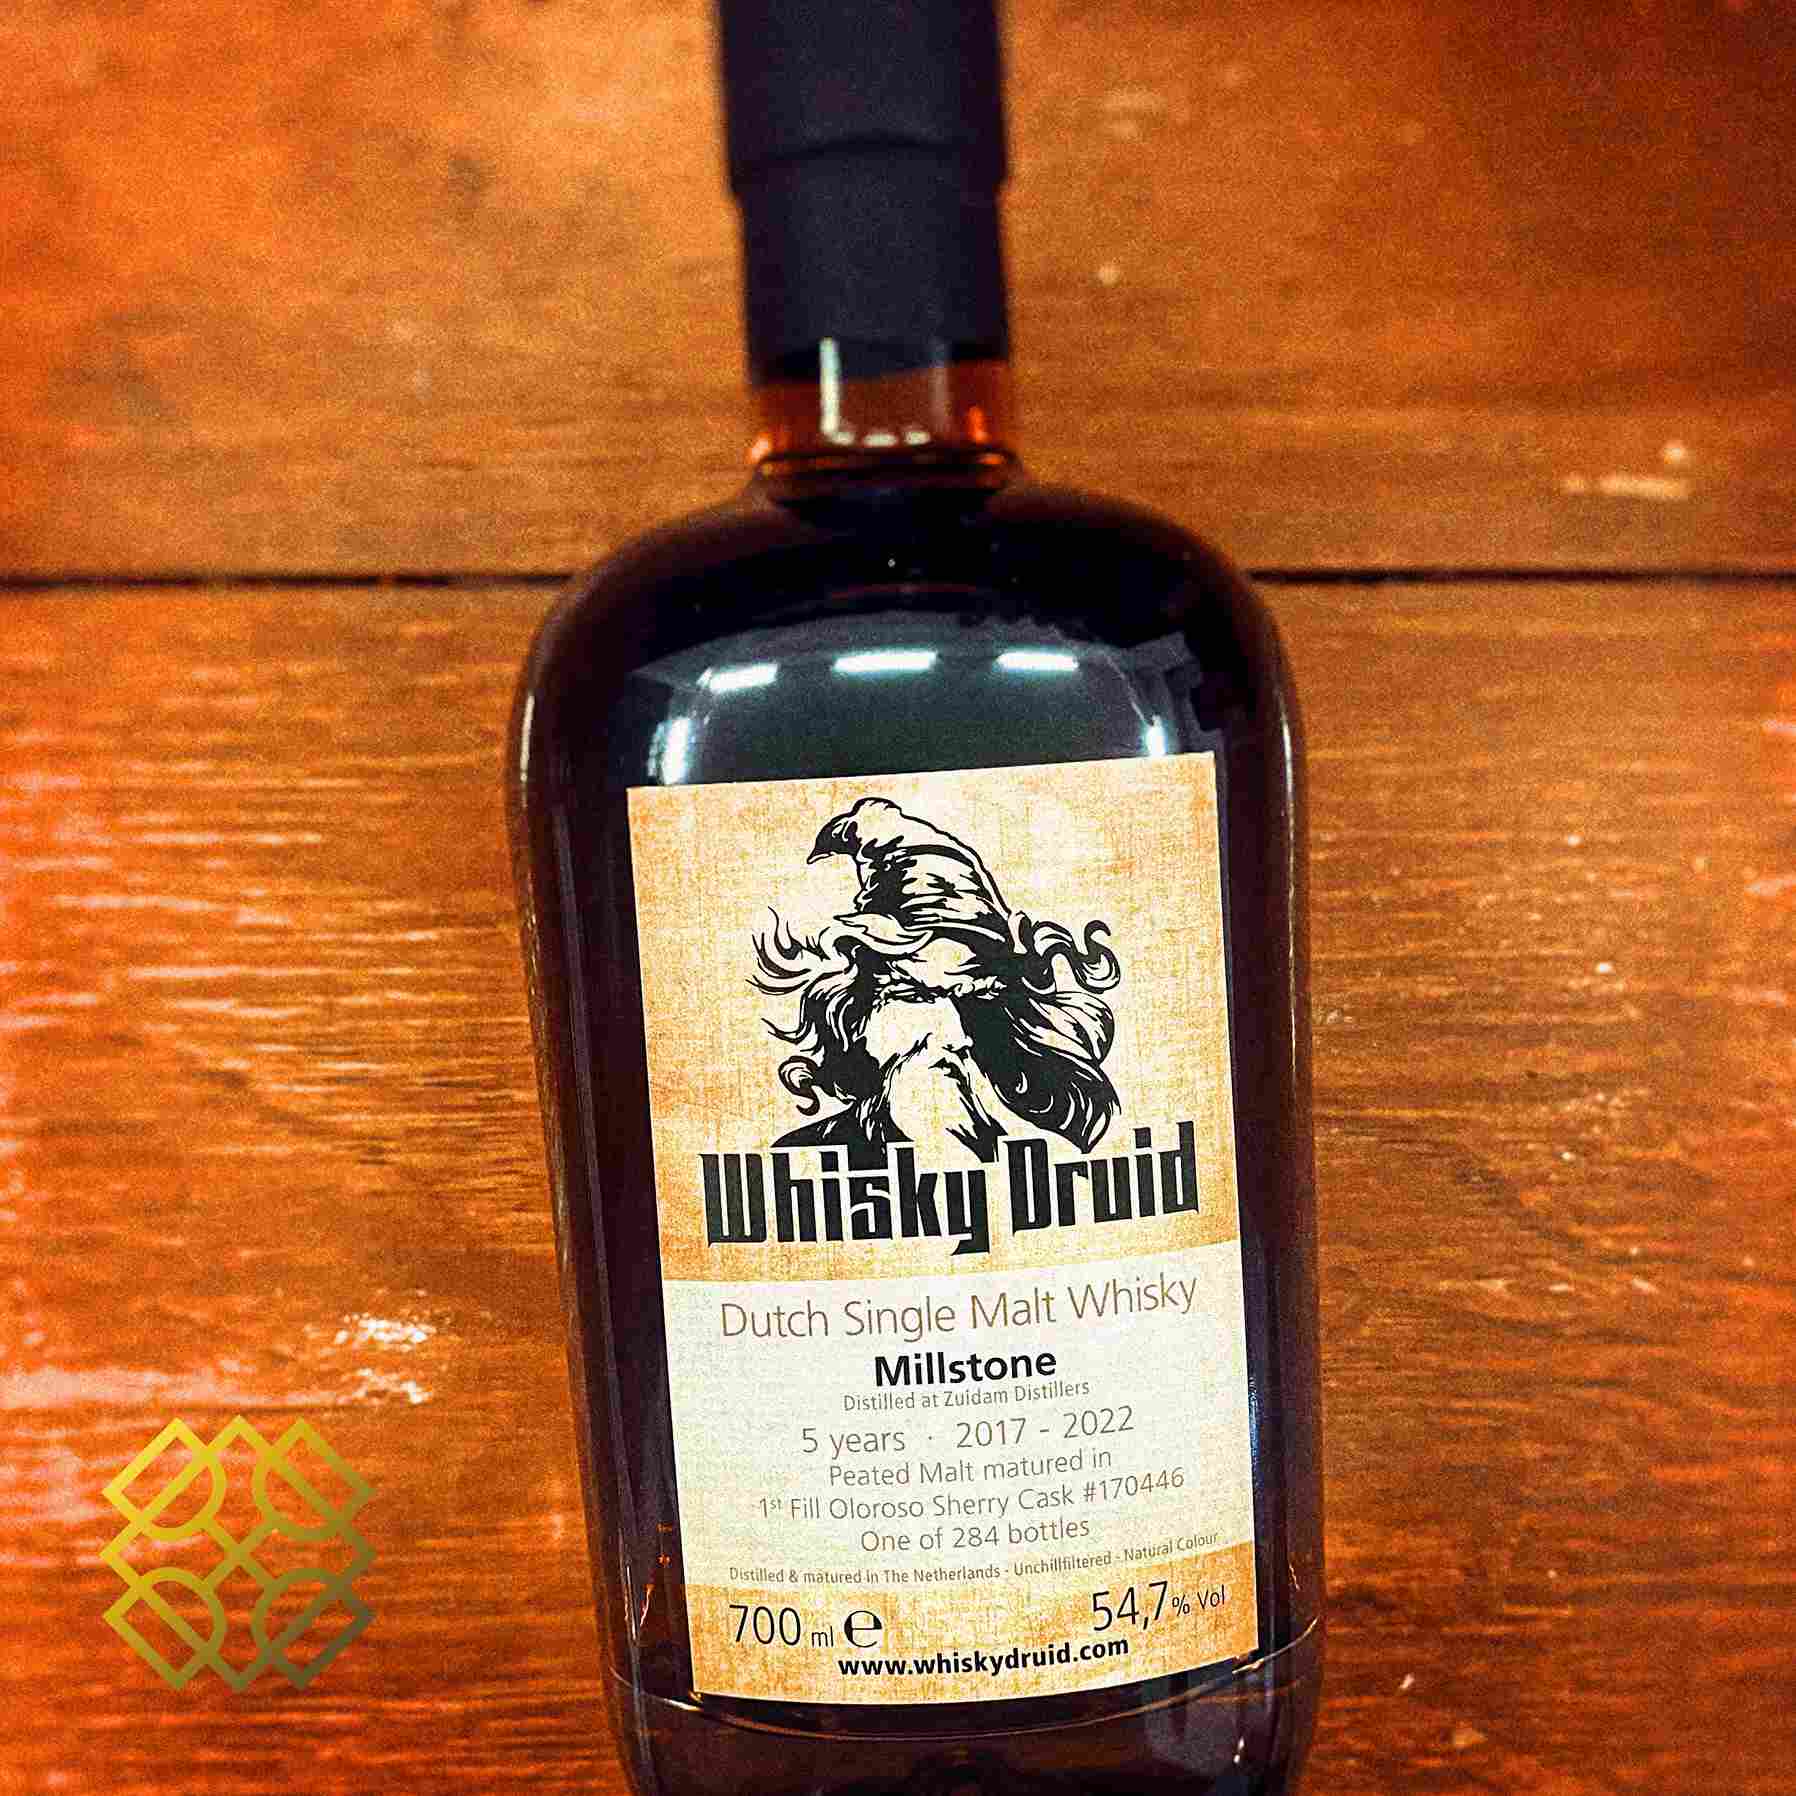 Whisky Druid Zuidam Millstone - 5YO, 2017/2022, 1st Fill Oloroso Sherry, 54.7%  Type : Single malt whisky 威士忌